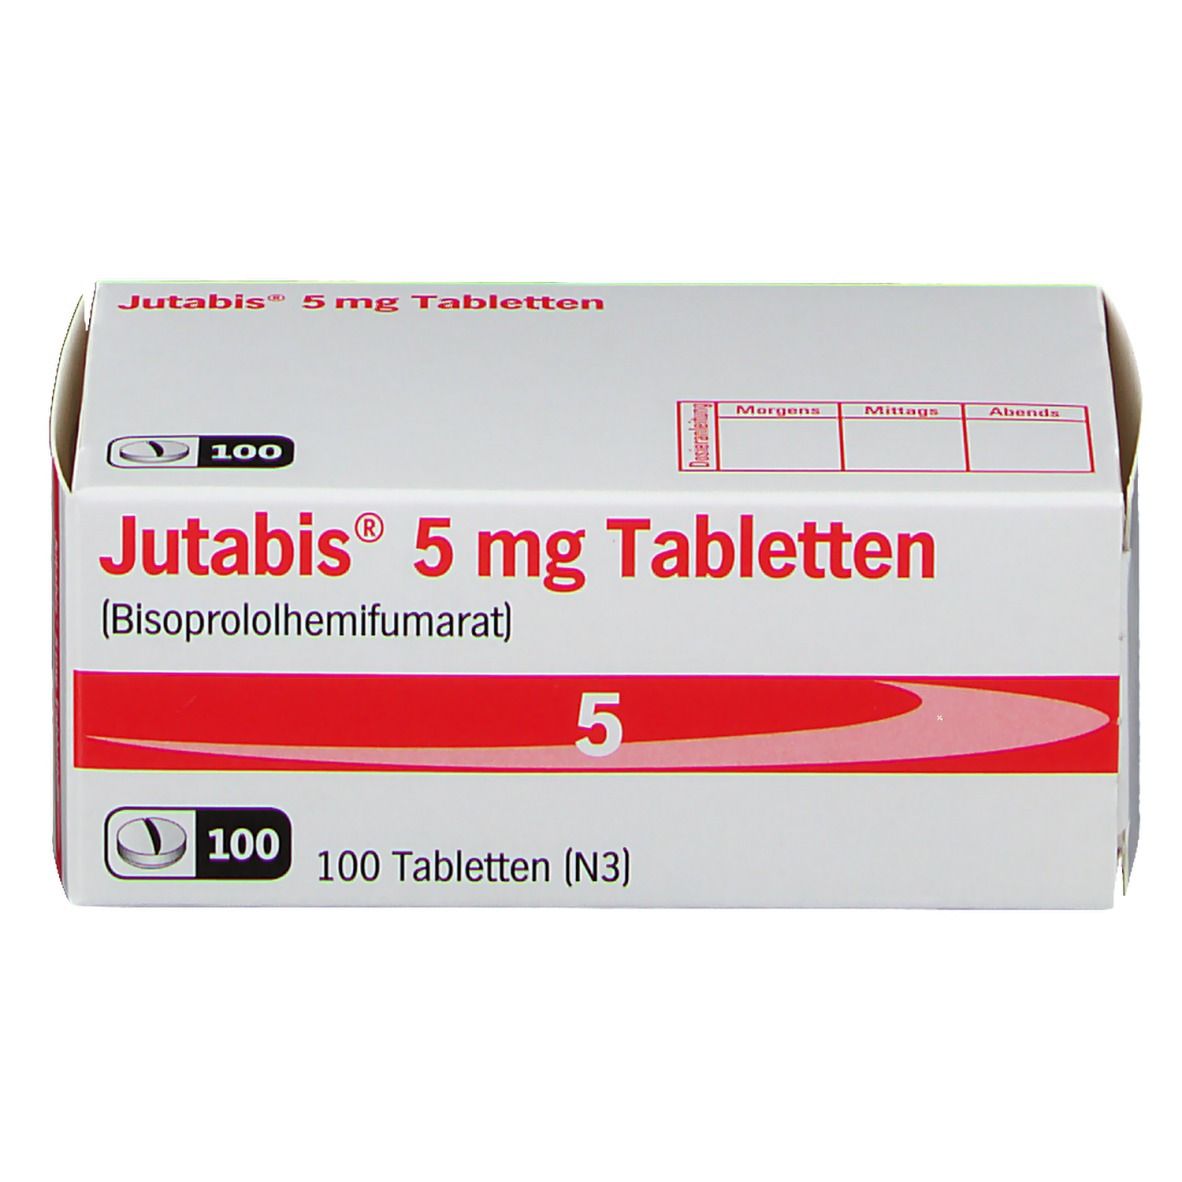 Jutabis® 5 mg